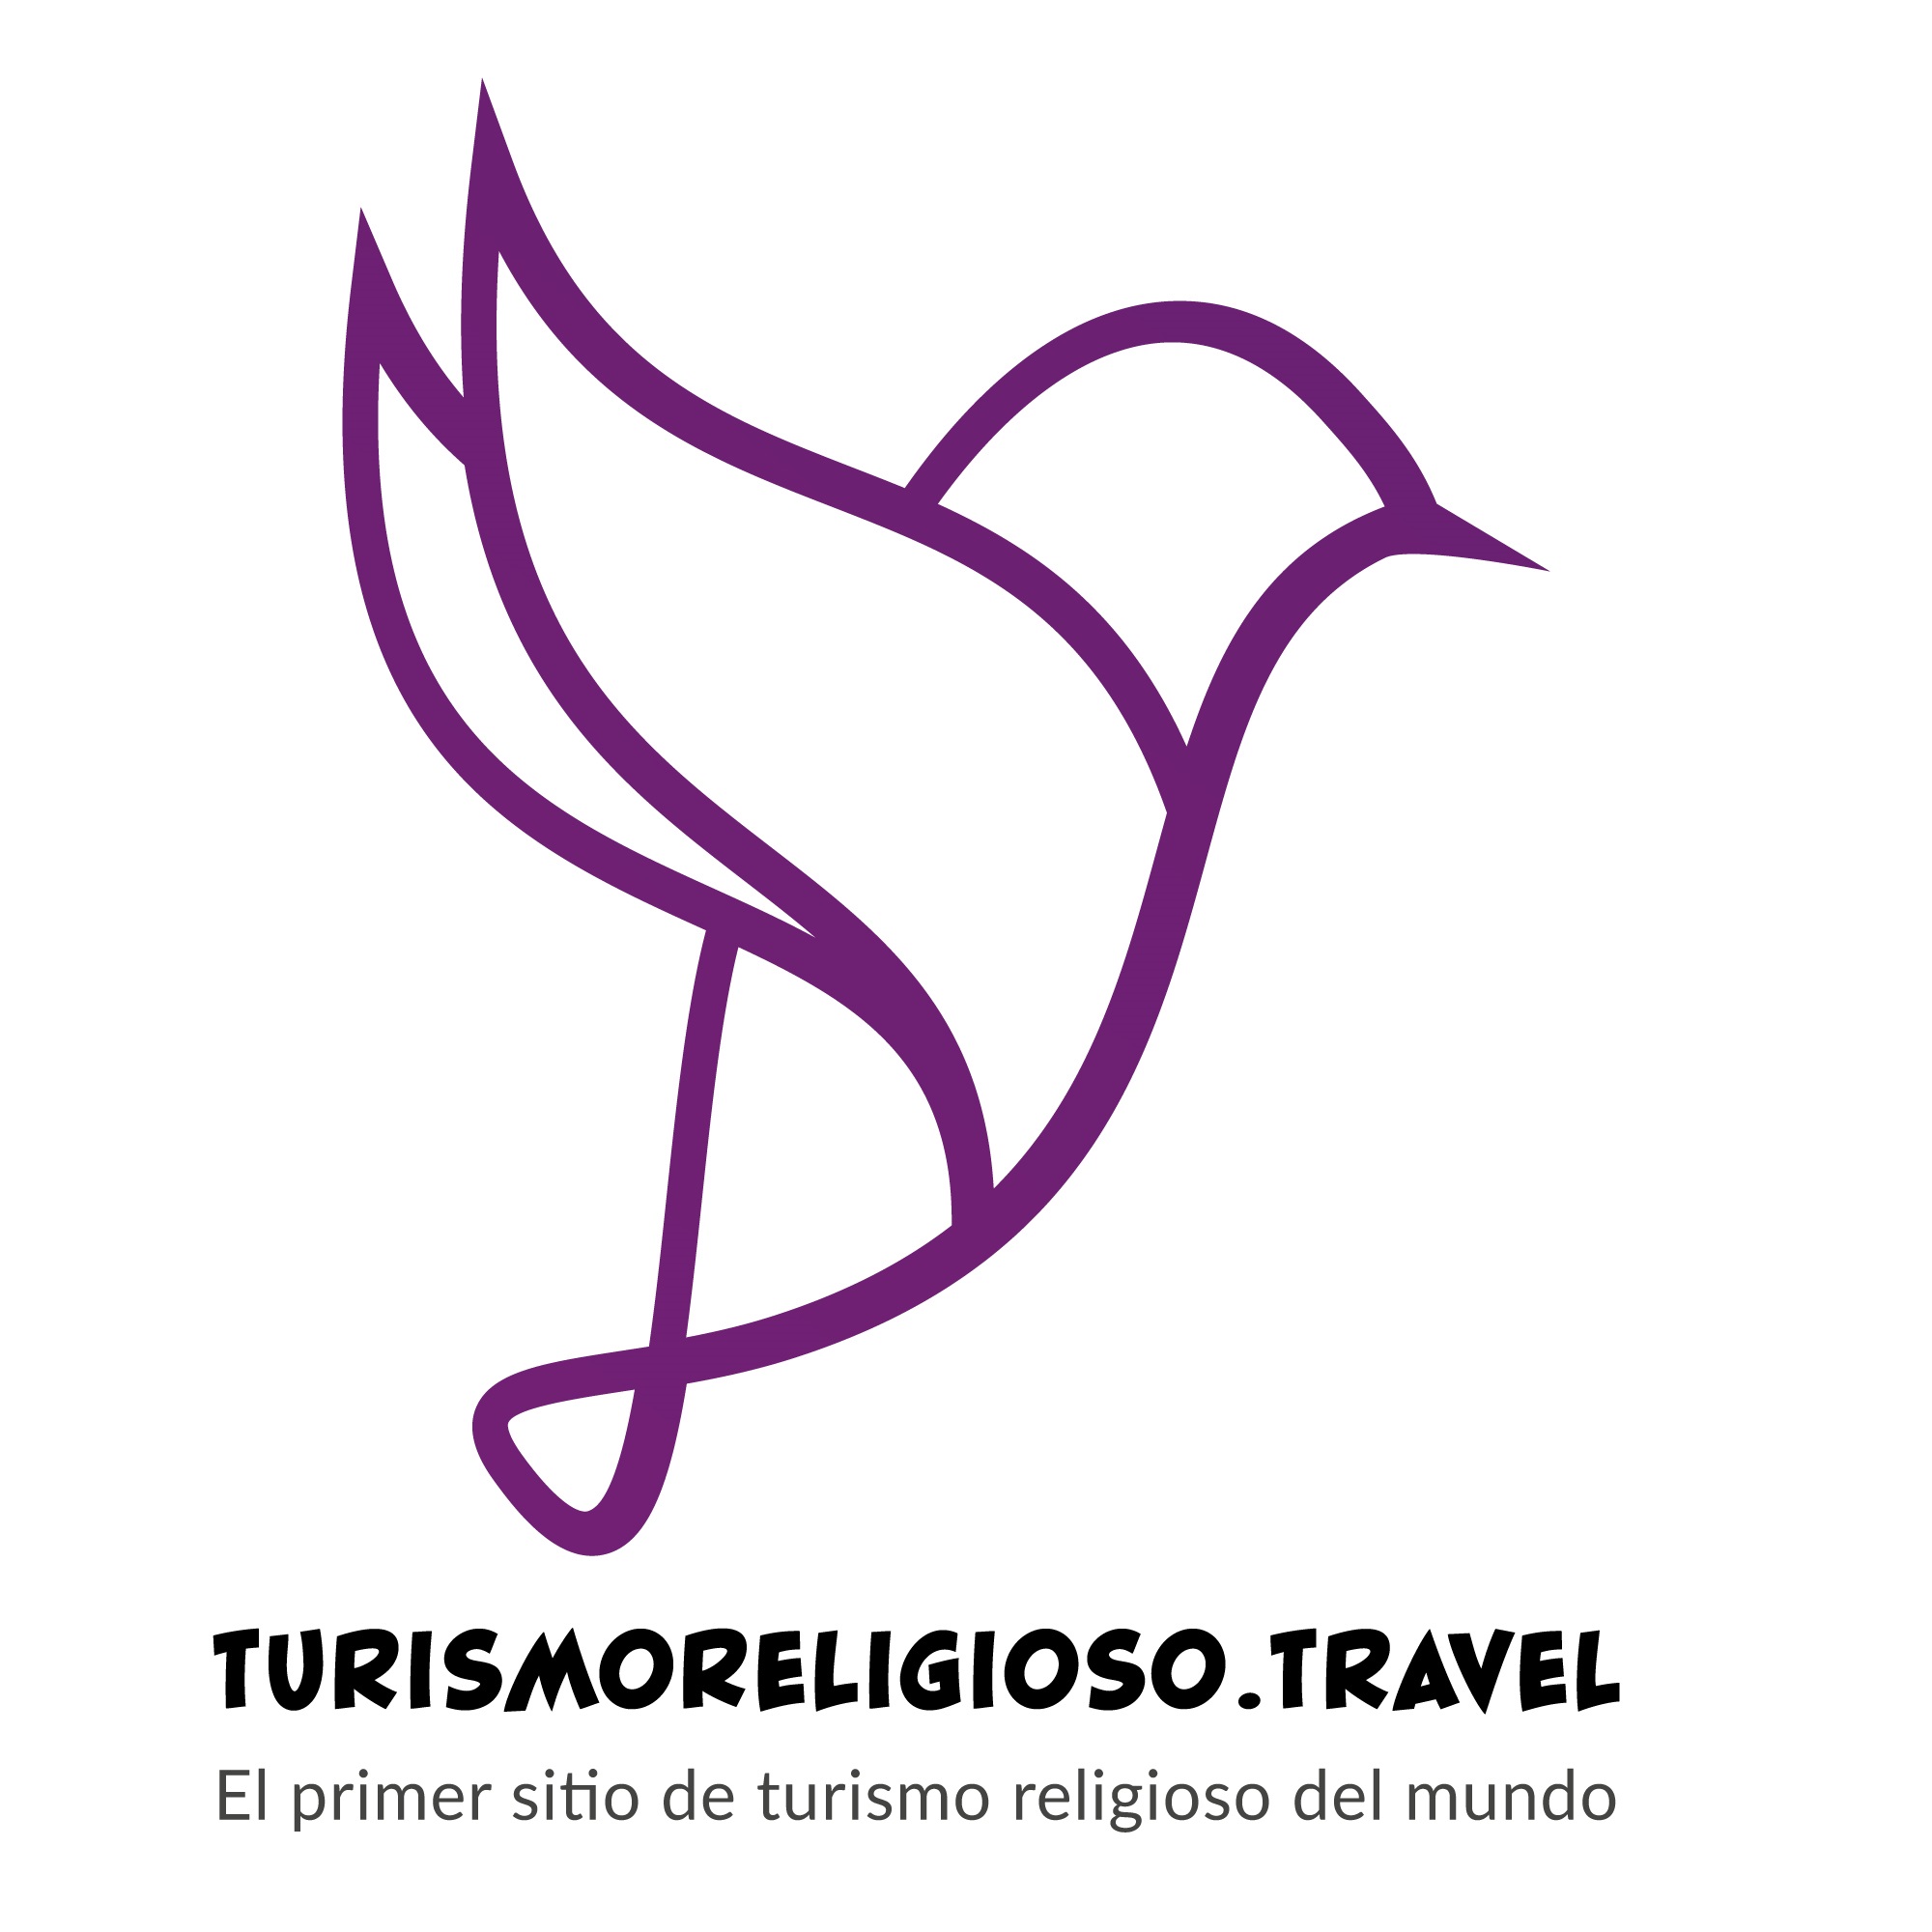 turismoreligioso.travel